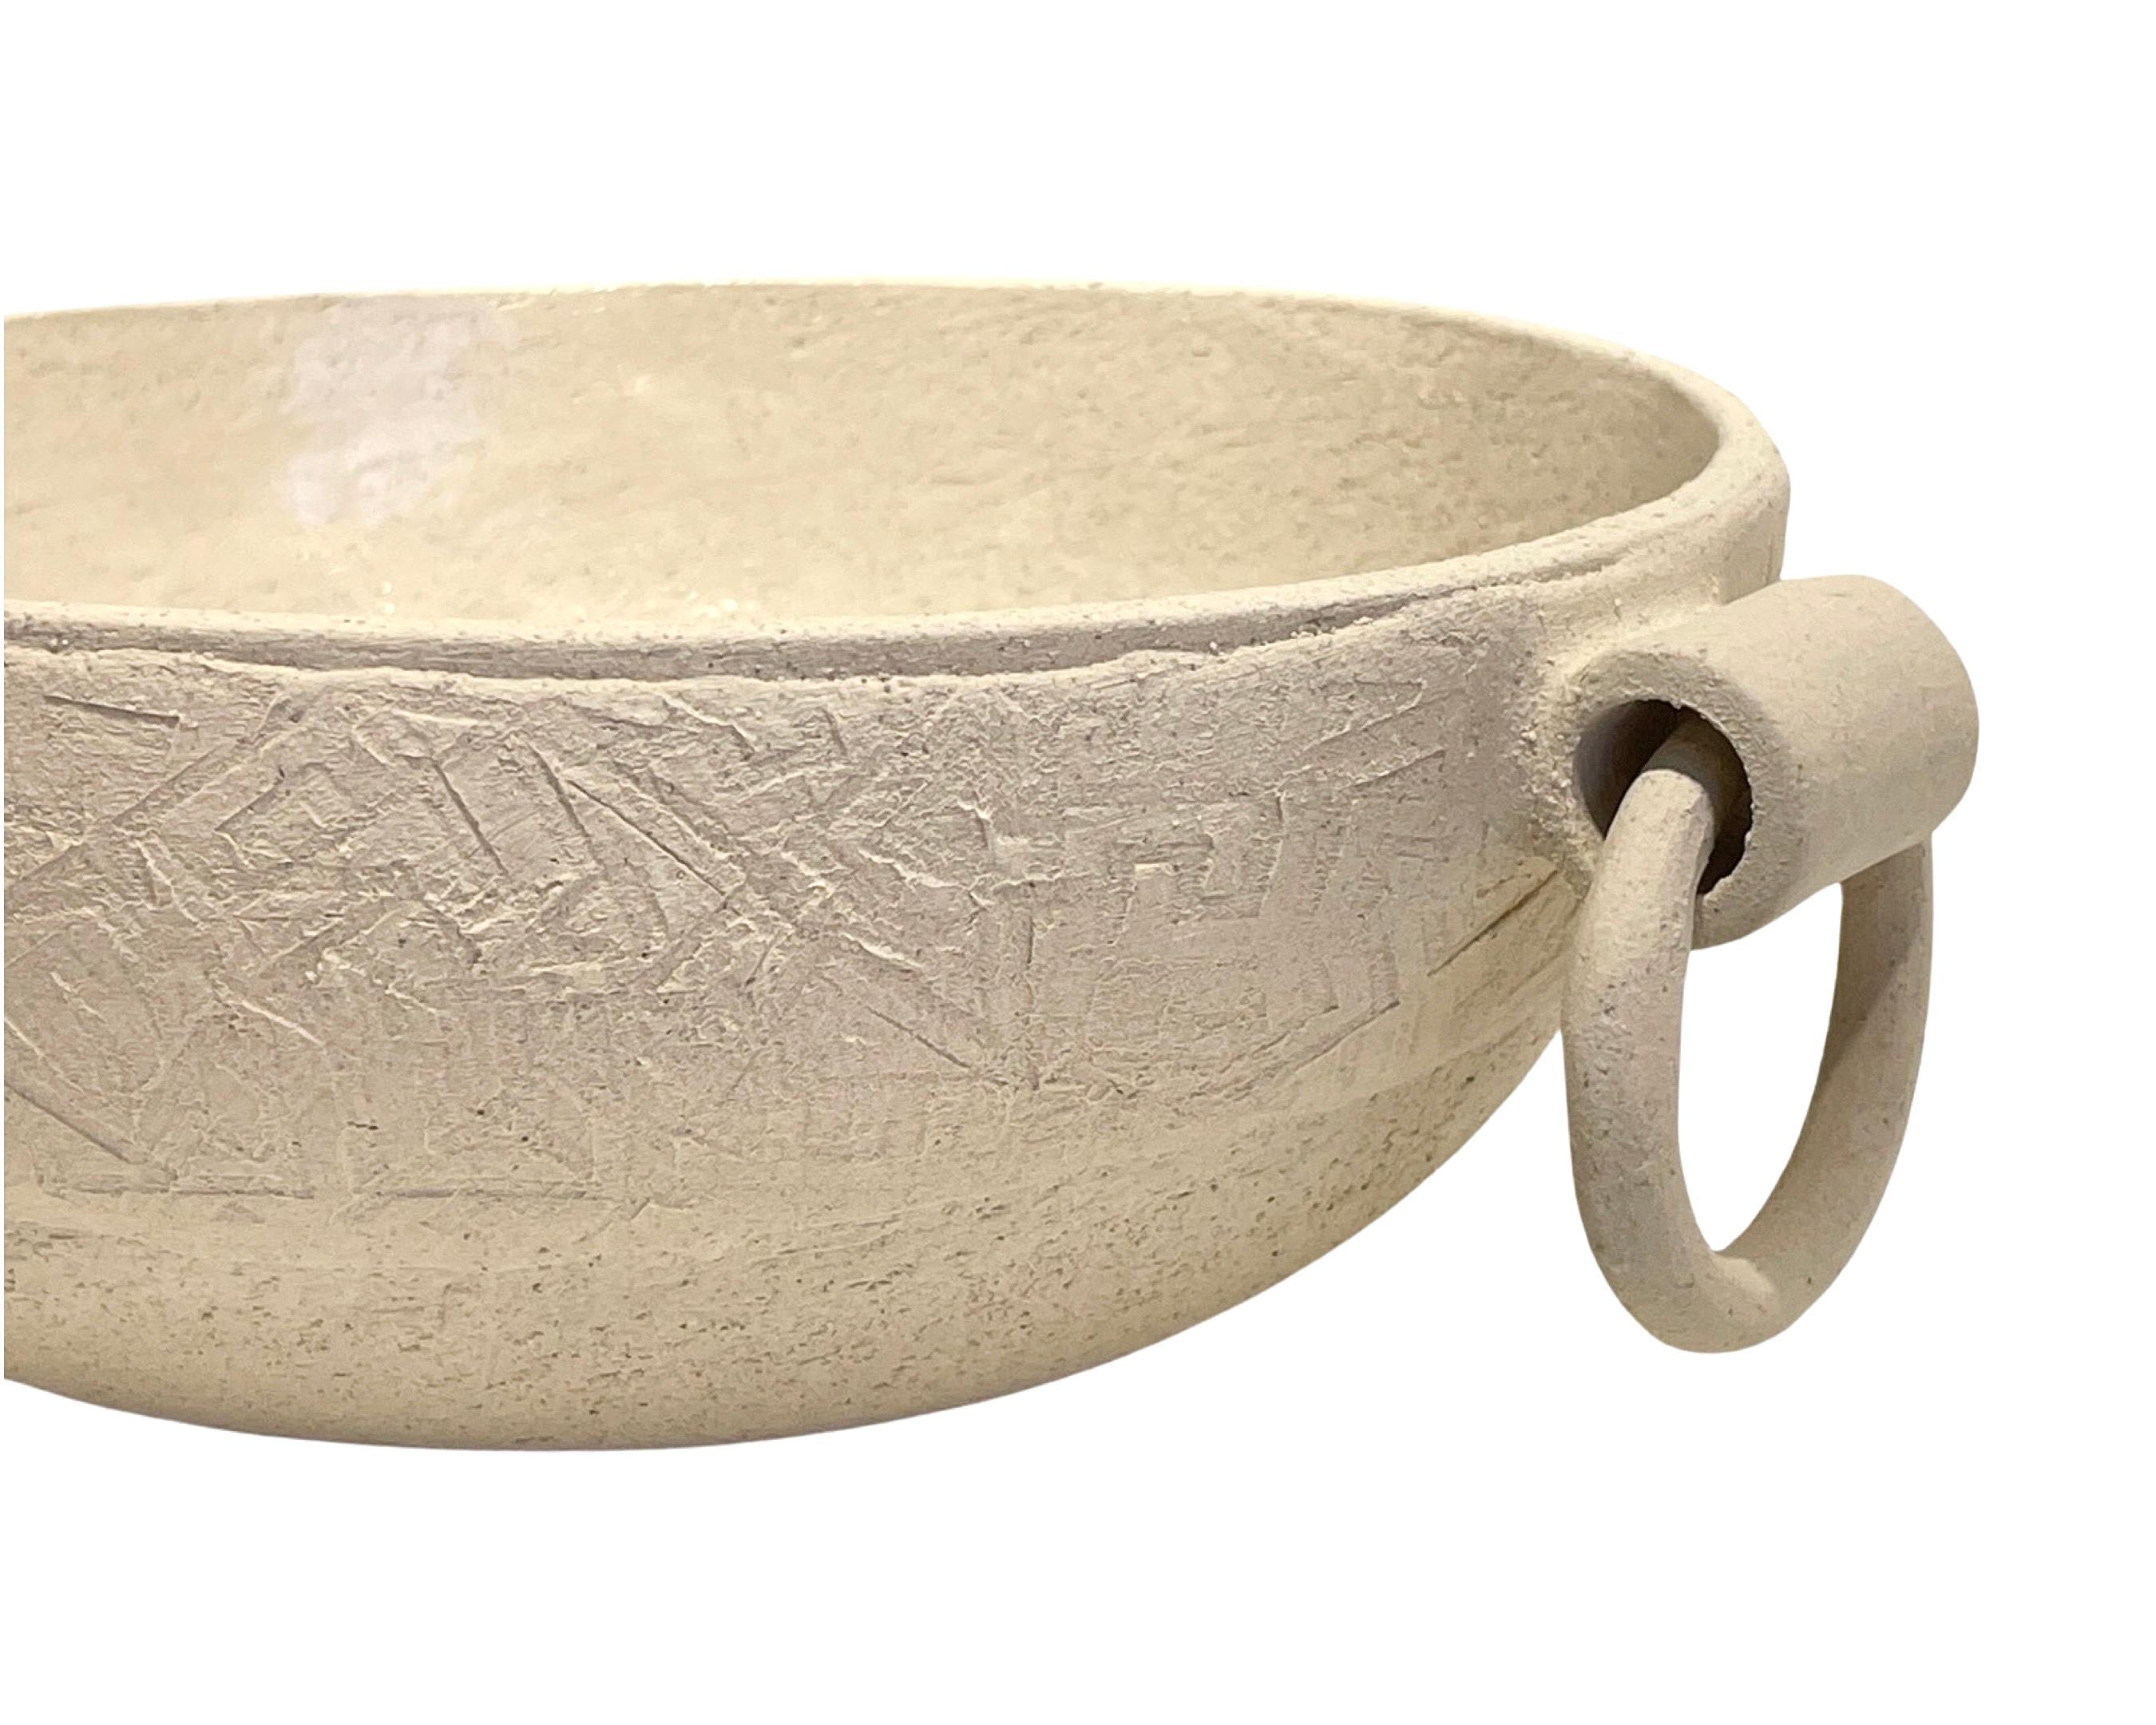 Organic Modern Artisanal Ceramic Centerpiece, Handcrafted Decorative Bowl, White